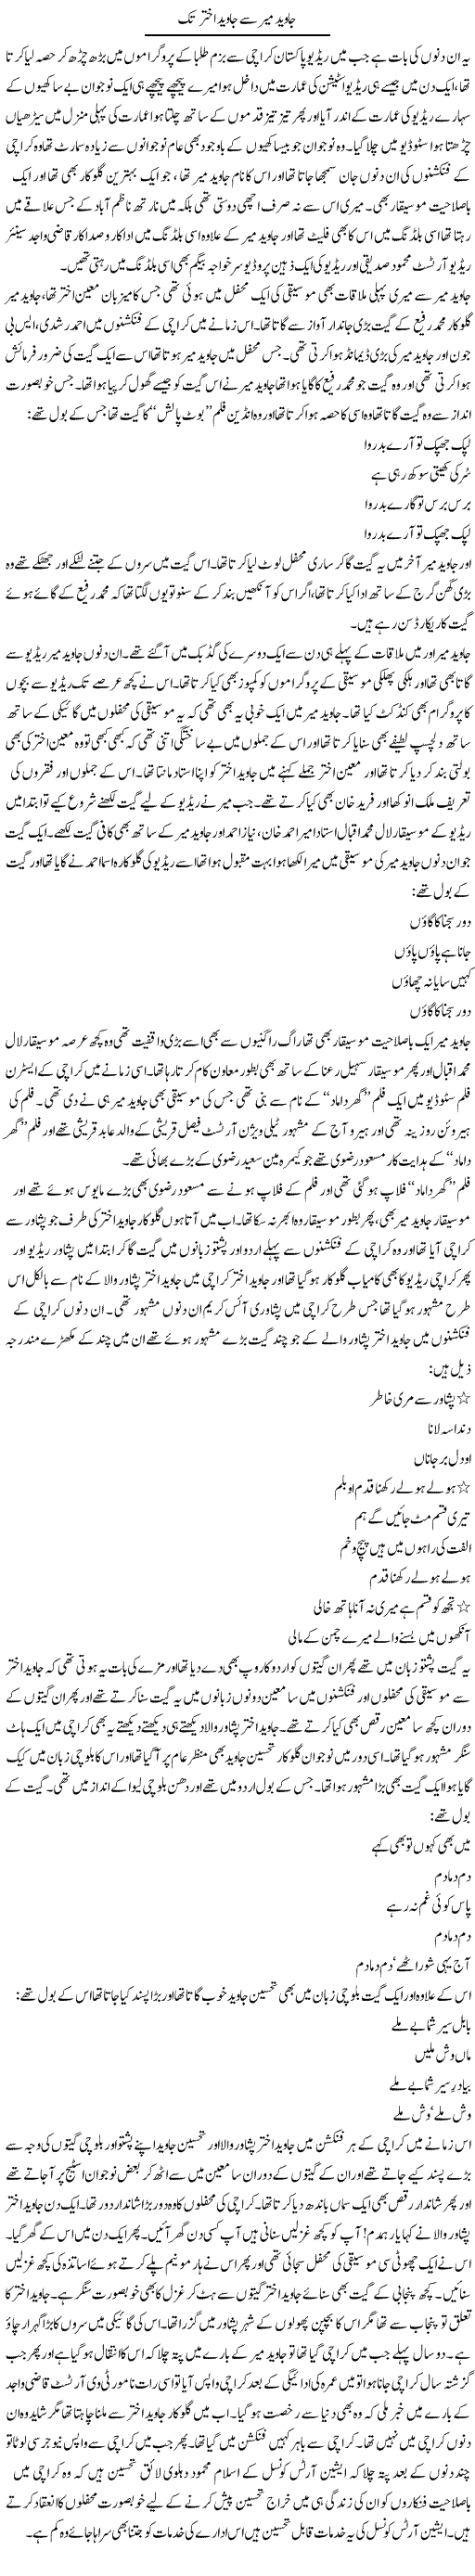 Javed Mir Se Javed Akhtar Tak | Younus Hamdam | Daily Urdu Columns